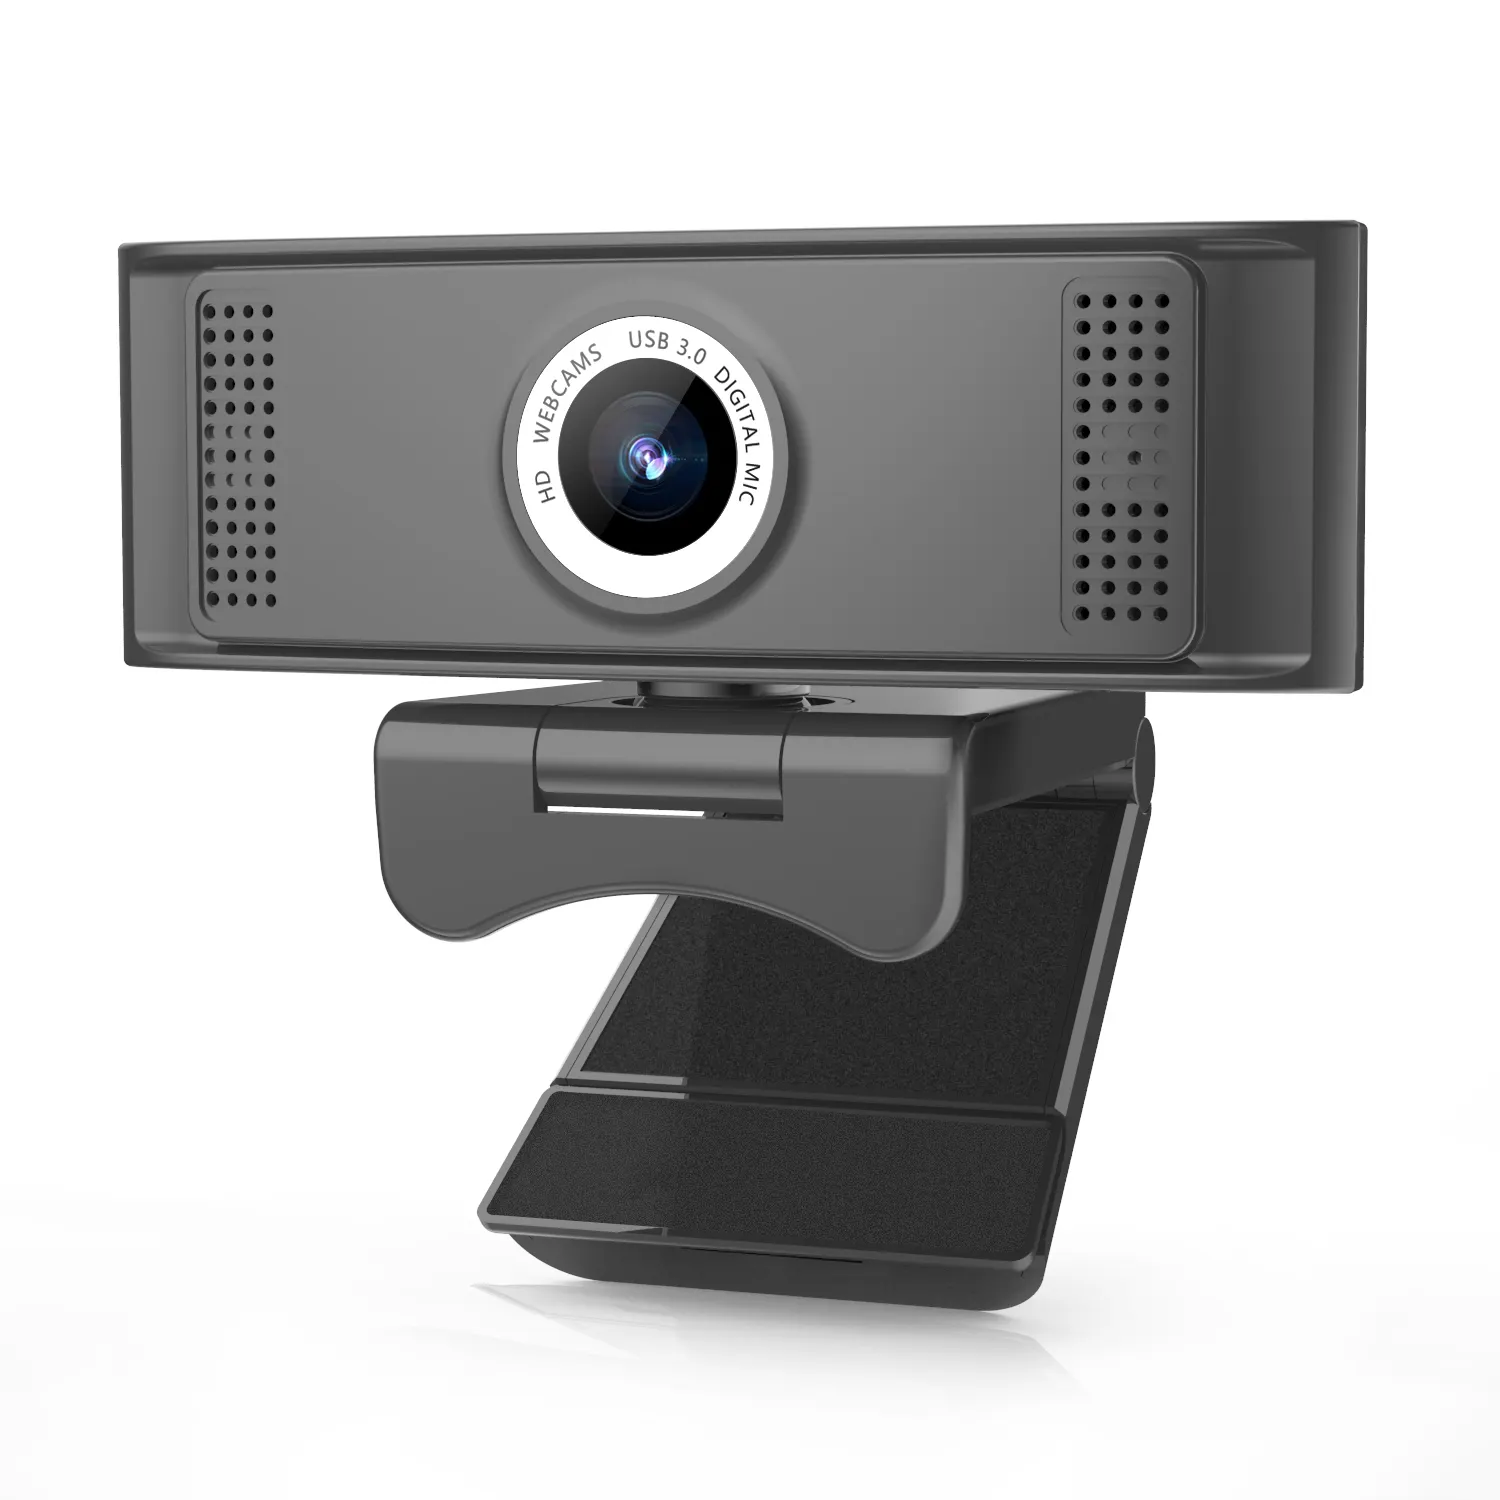 Hot Sales USB 2.0 Video Conference Camera IP Camera Webcam With Remote Control